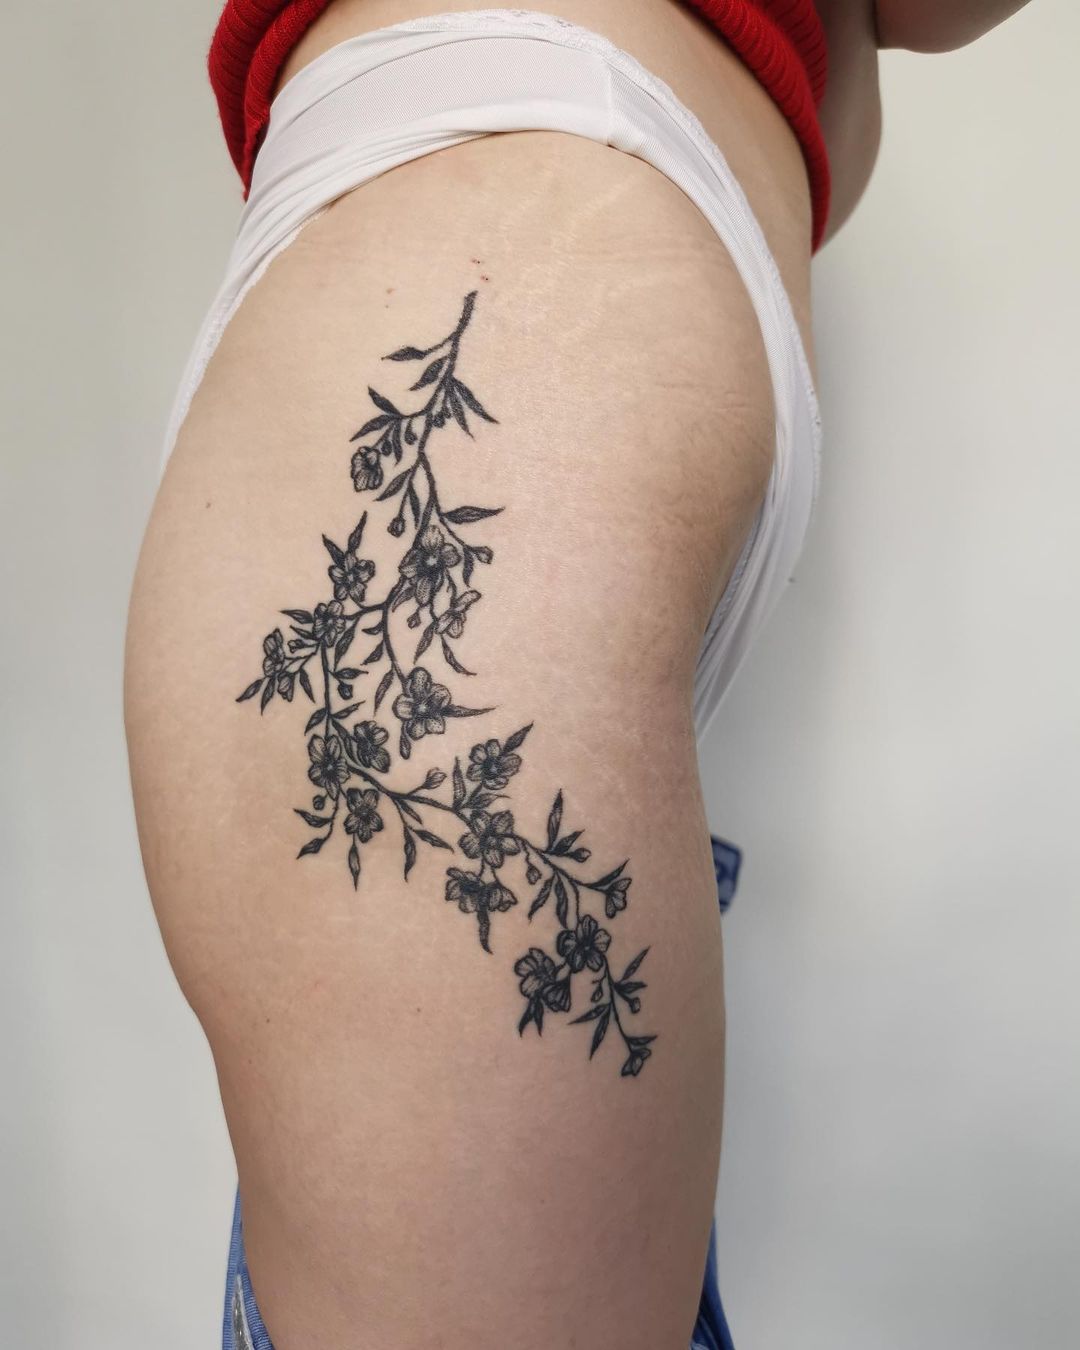 10 Minimalist Hip Tattoo Ideas If You Want Something Discreet